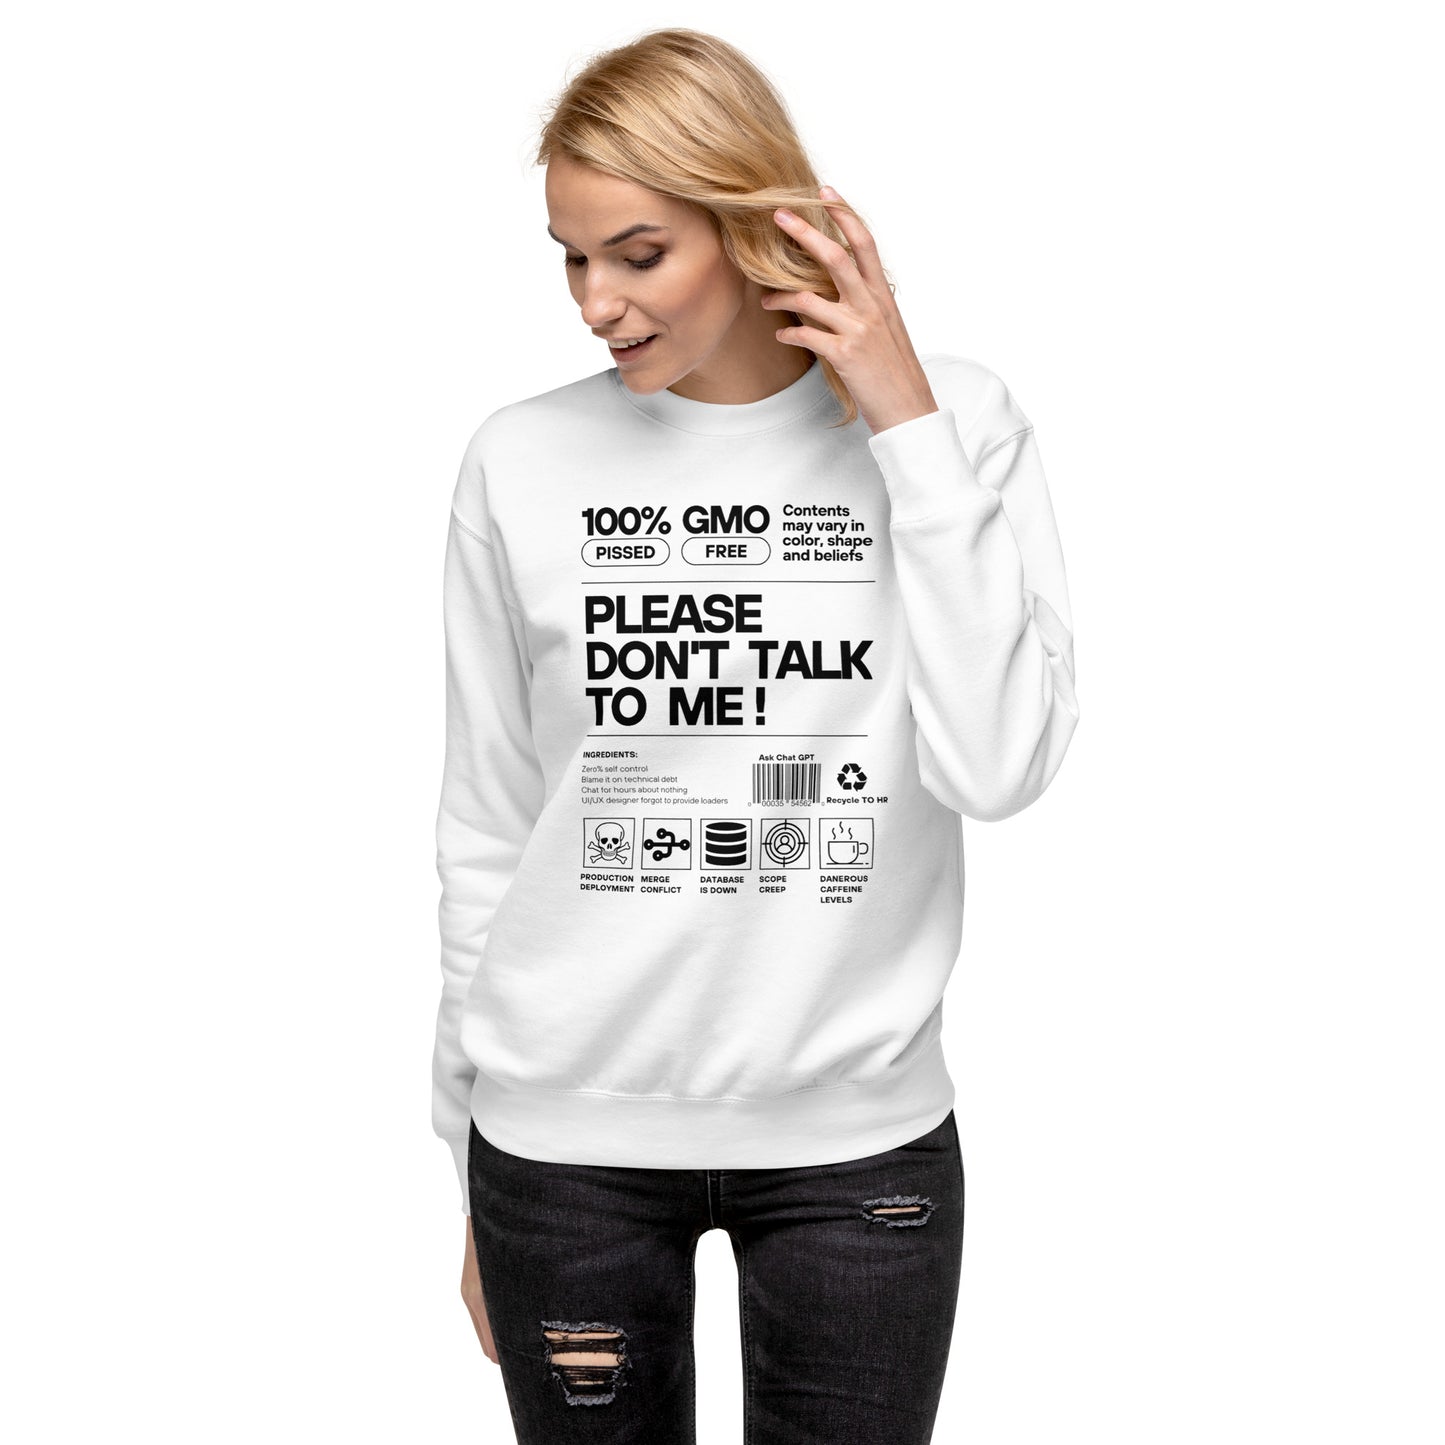 Don't Talk to Me Premium Sweatshirt - Light